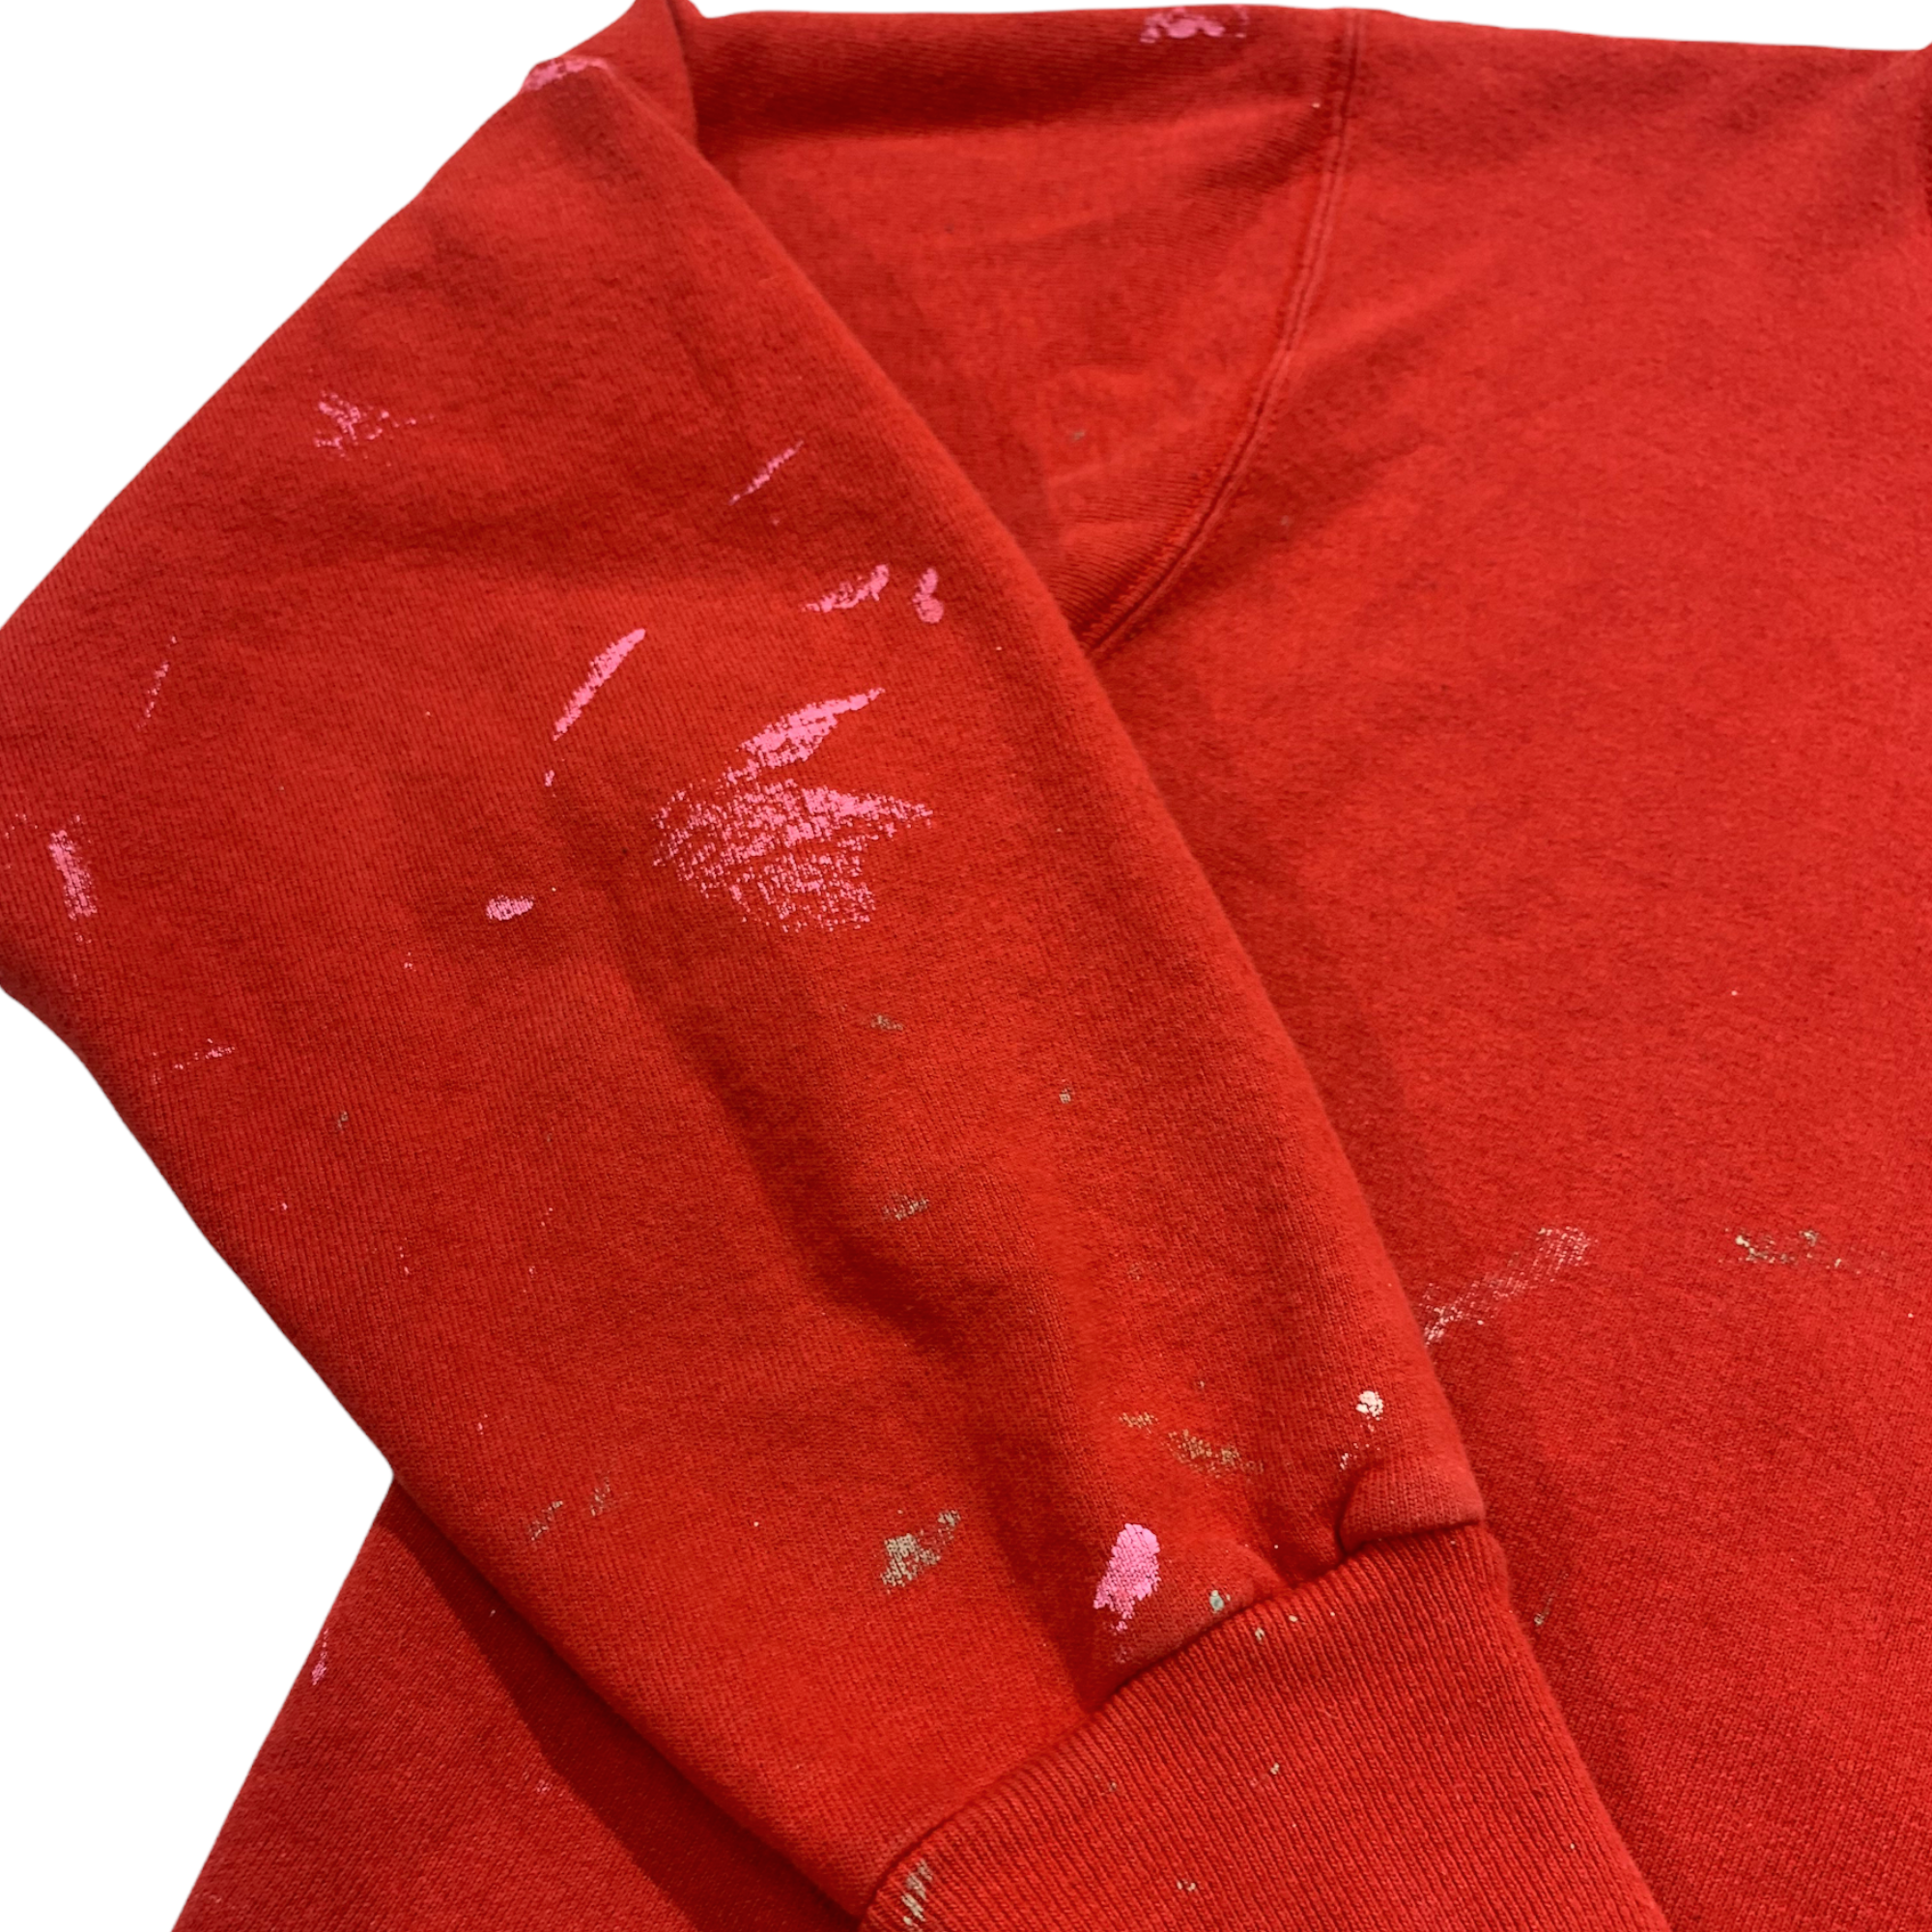 Champion Painter Crewneck Sweatshirt - Red - S/M